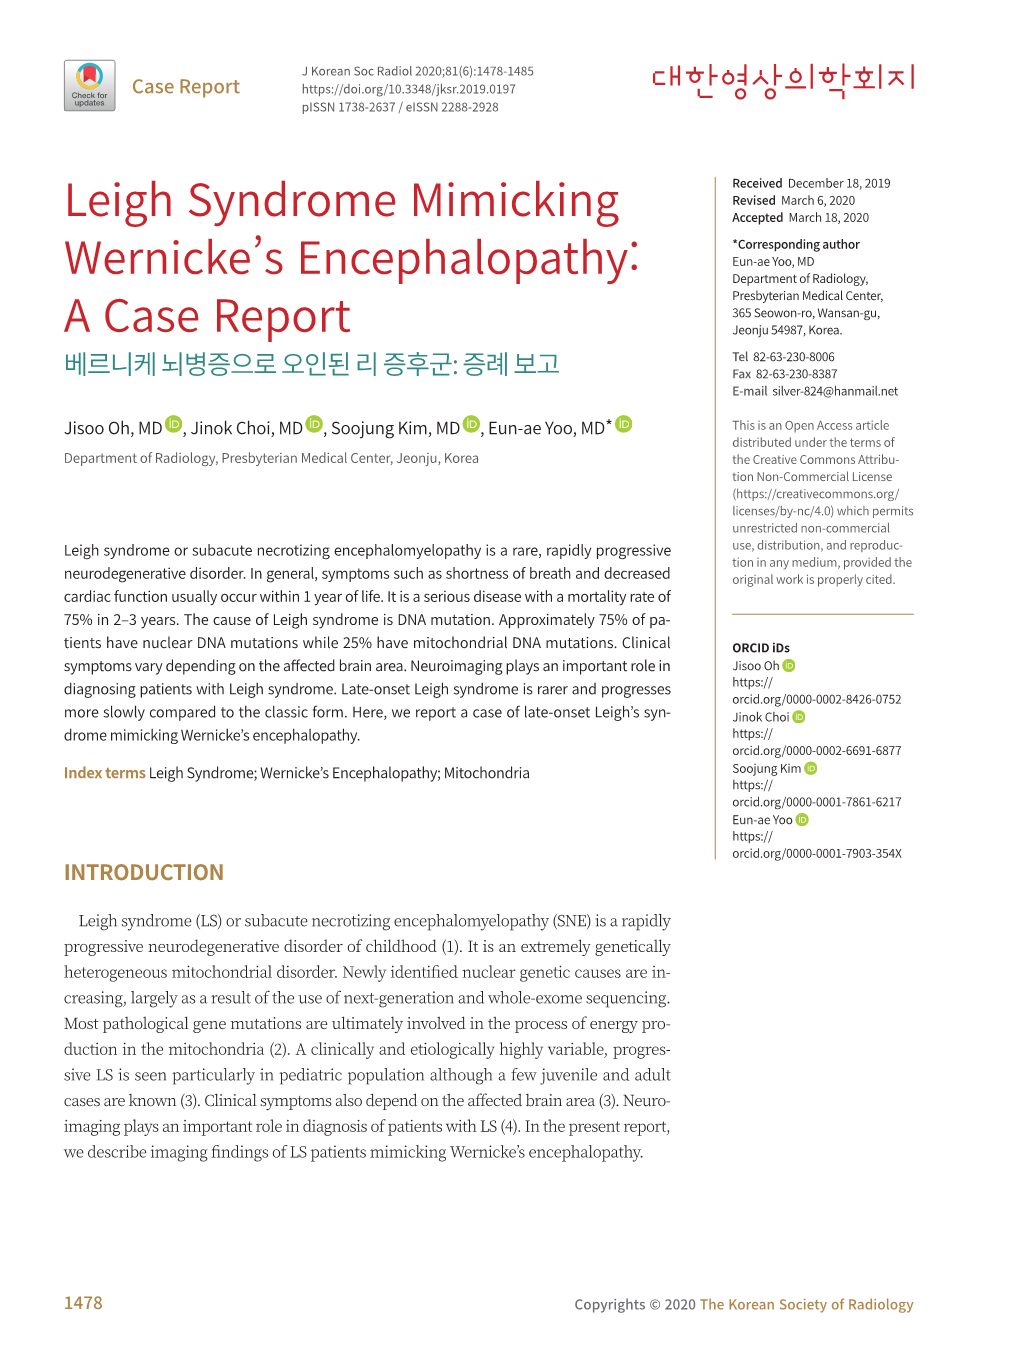 Leigh Syndrome Mimicking Wernicke's Encephalopathy: A